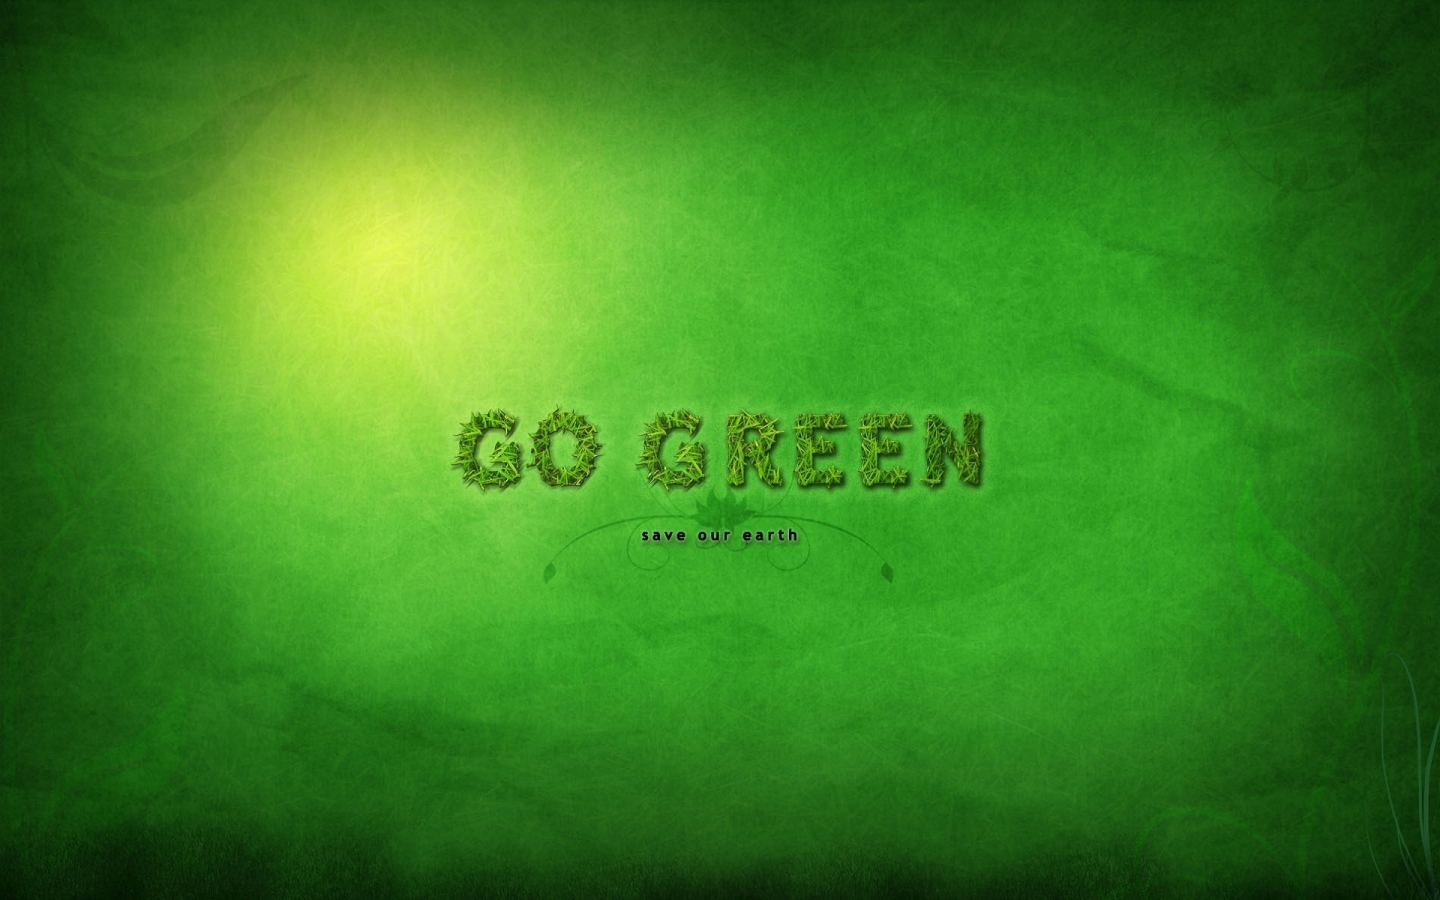 Go Green for 1440 x 900 widescreen resolution